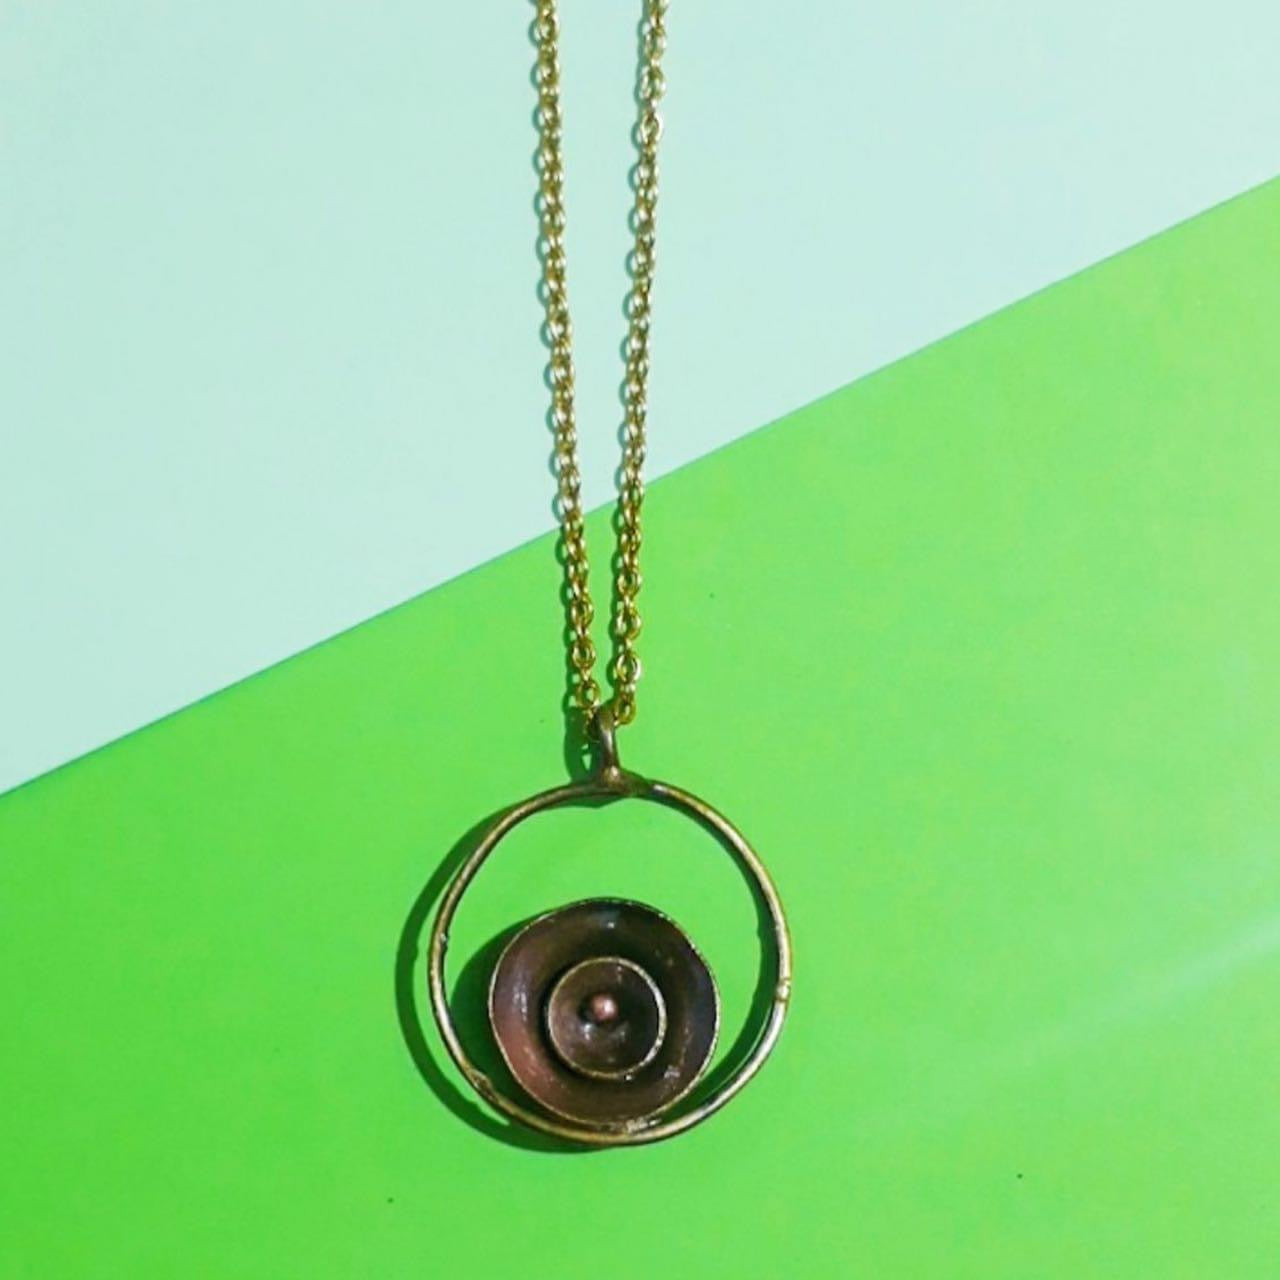 Copper and brass circle in circle pendant neckpiece